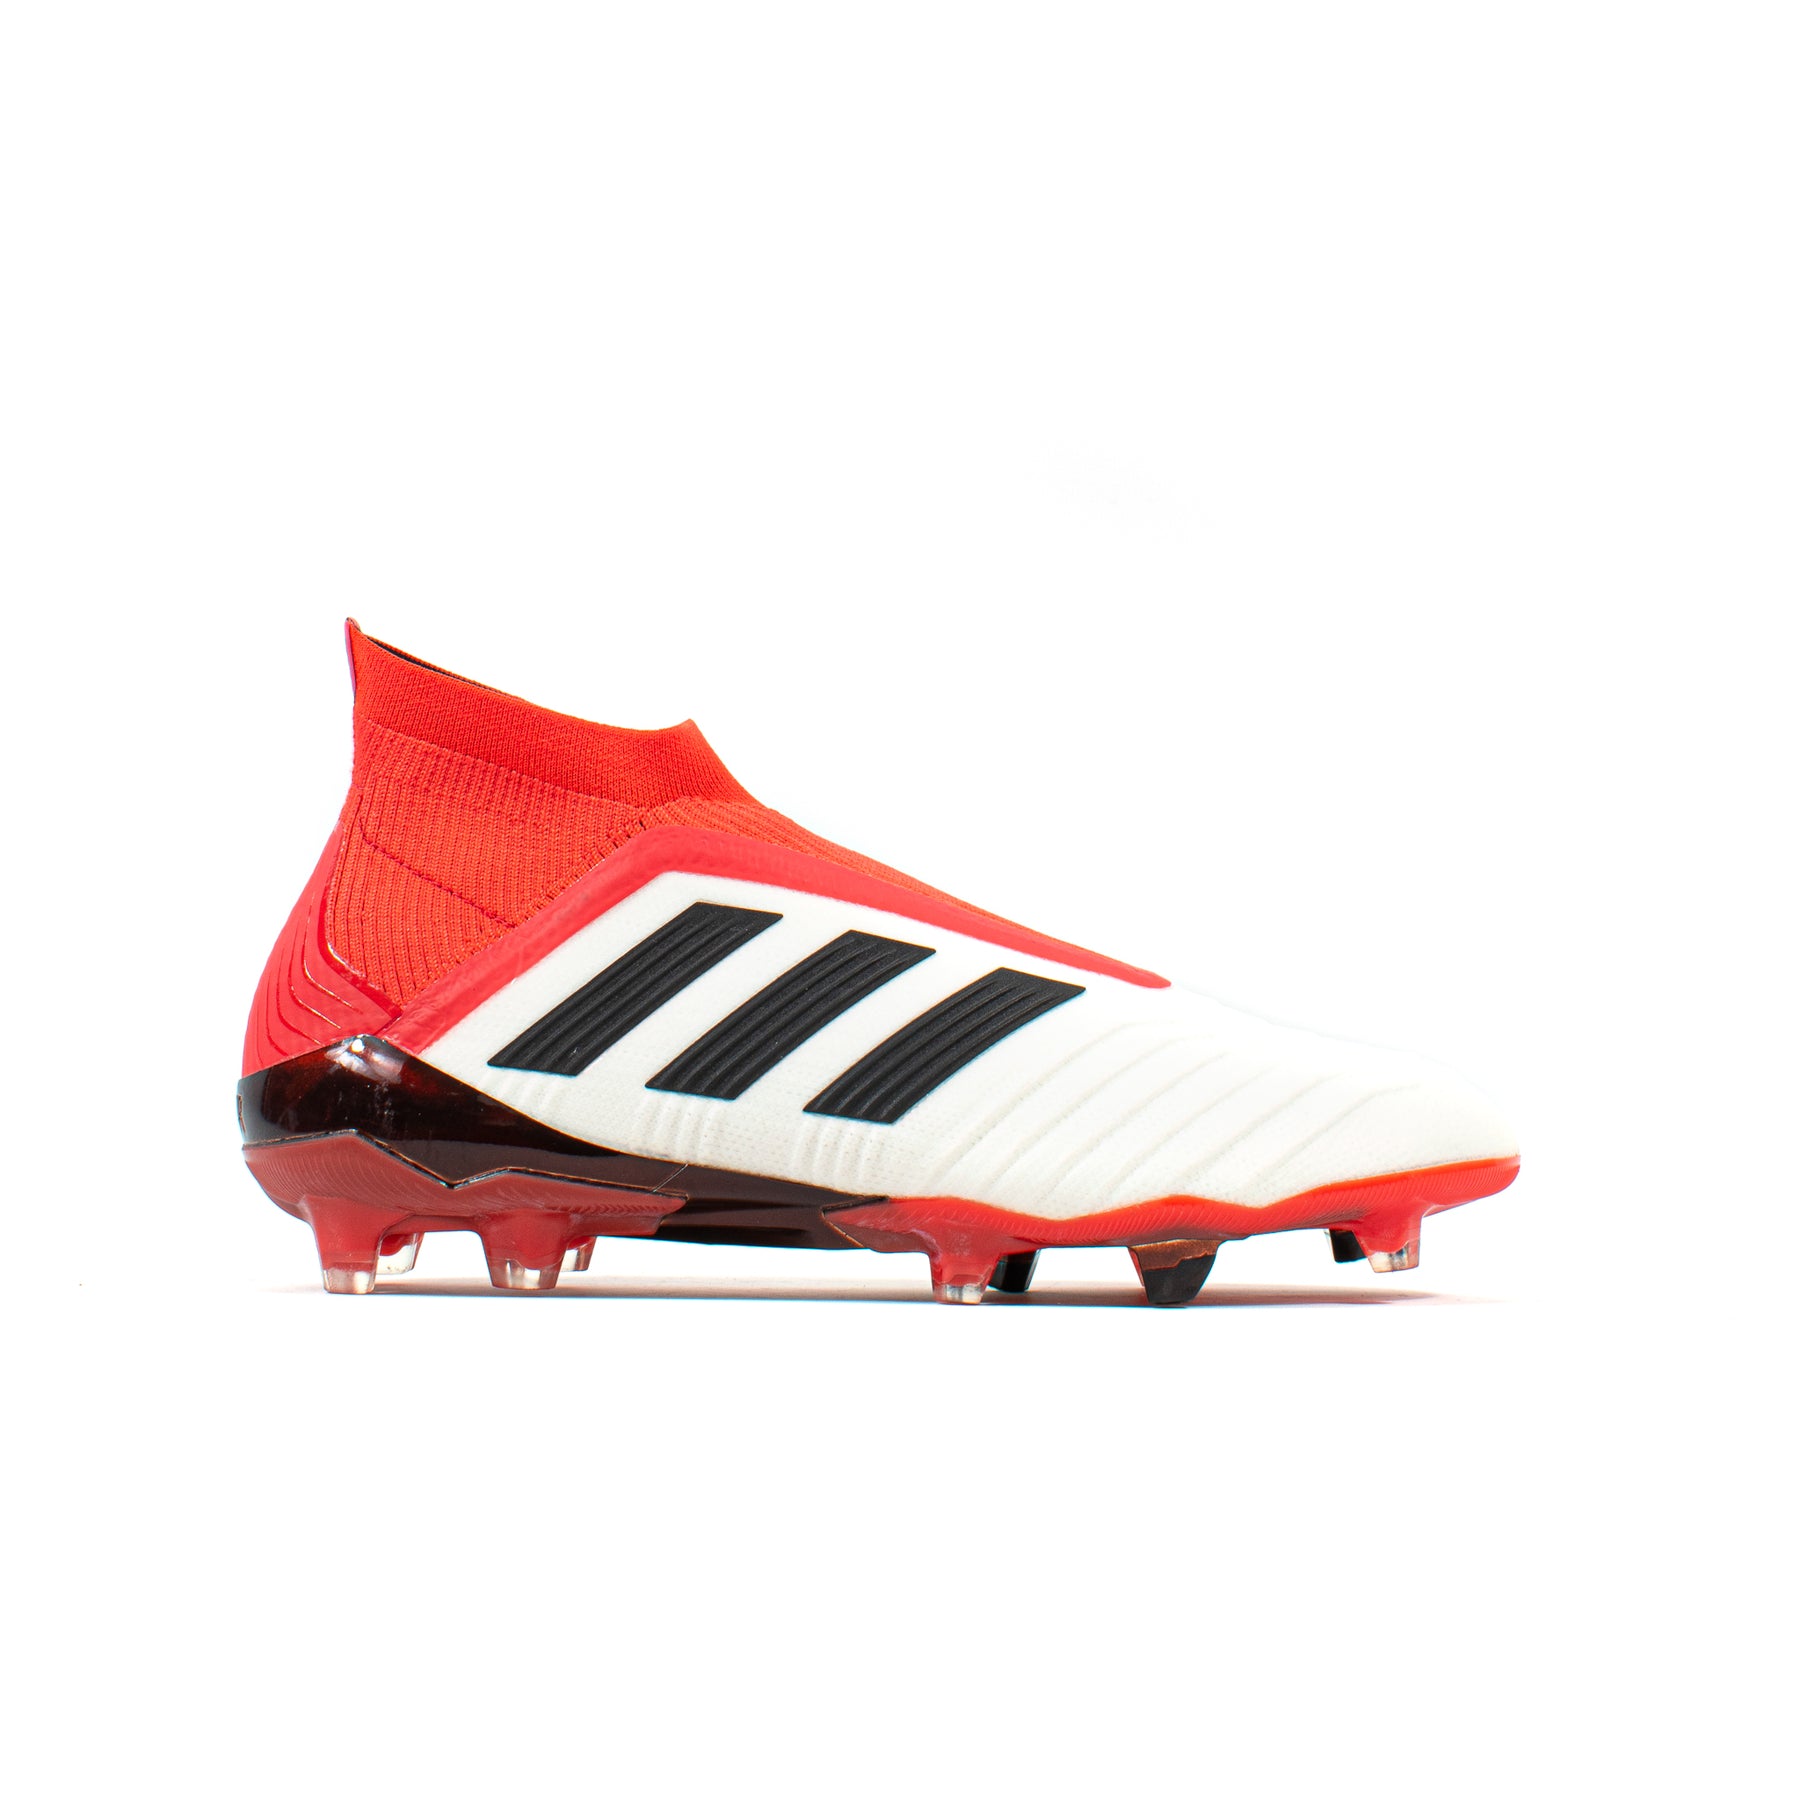 Diez años Australia máximo Adidas Predator 18+ White Red FG – Classic Soccer Cleats